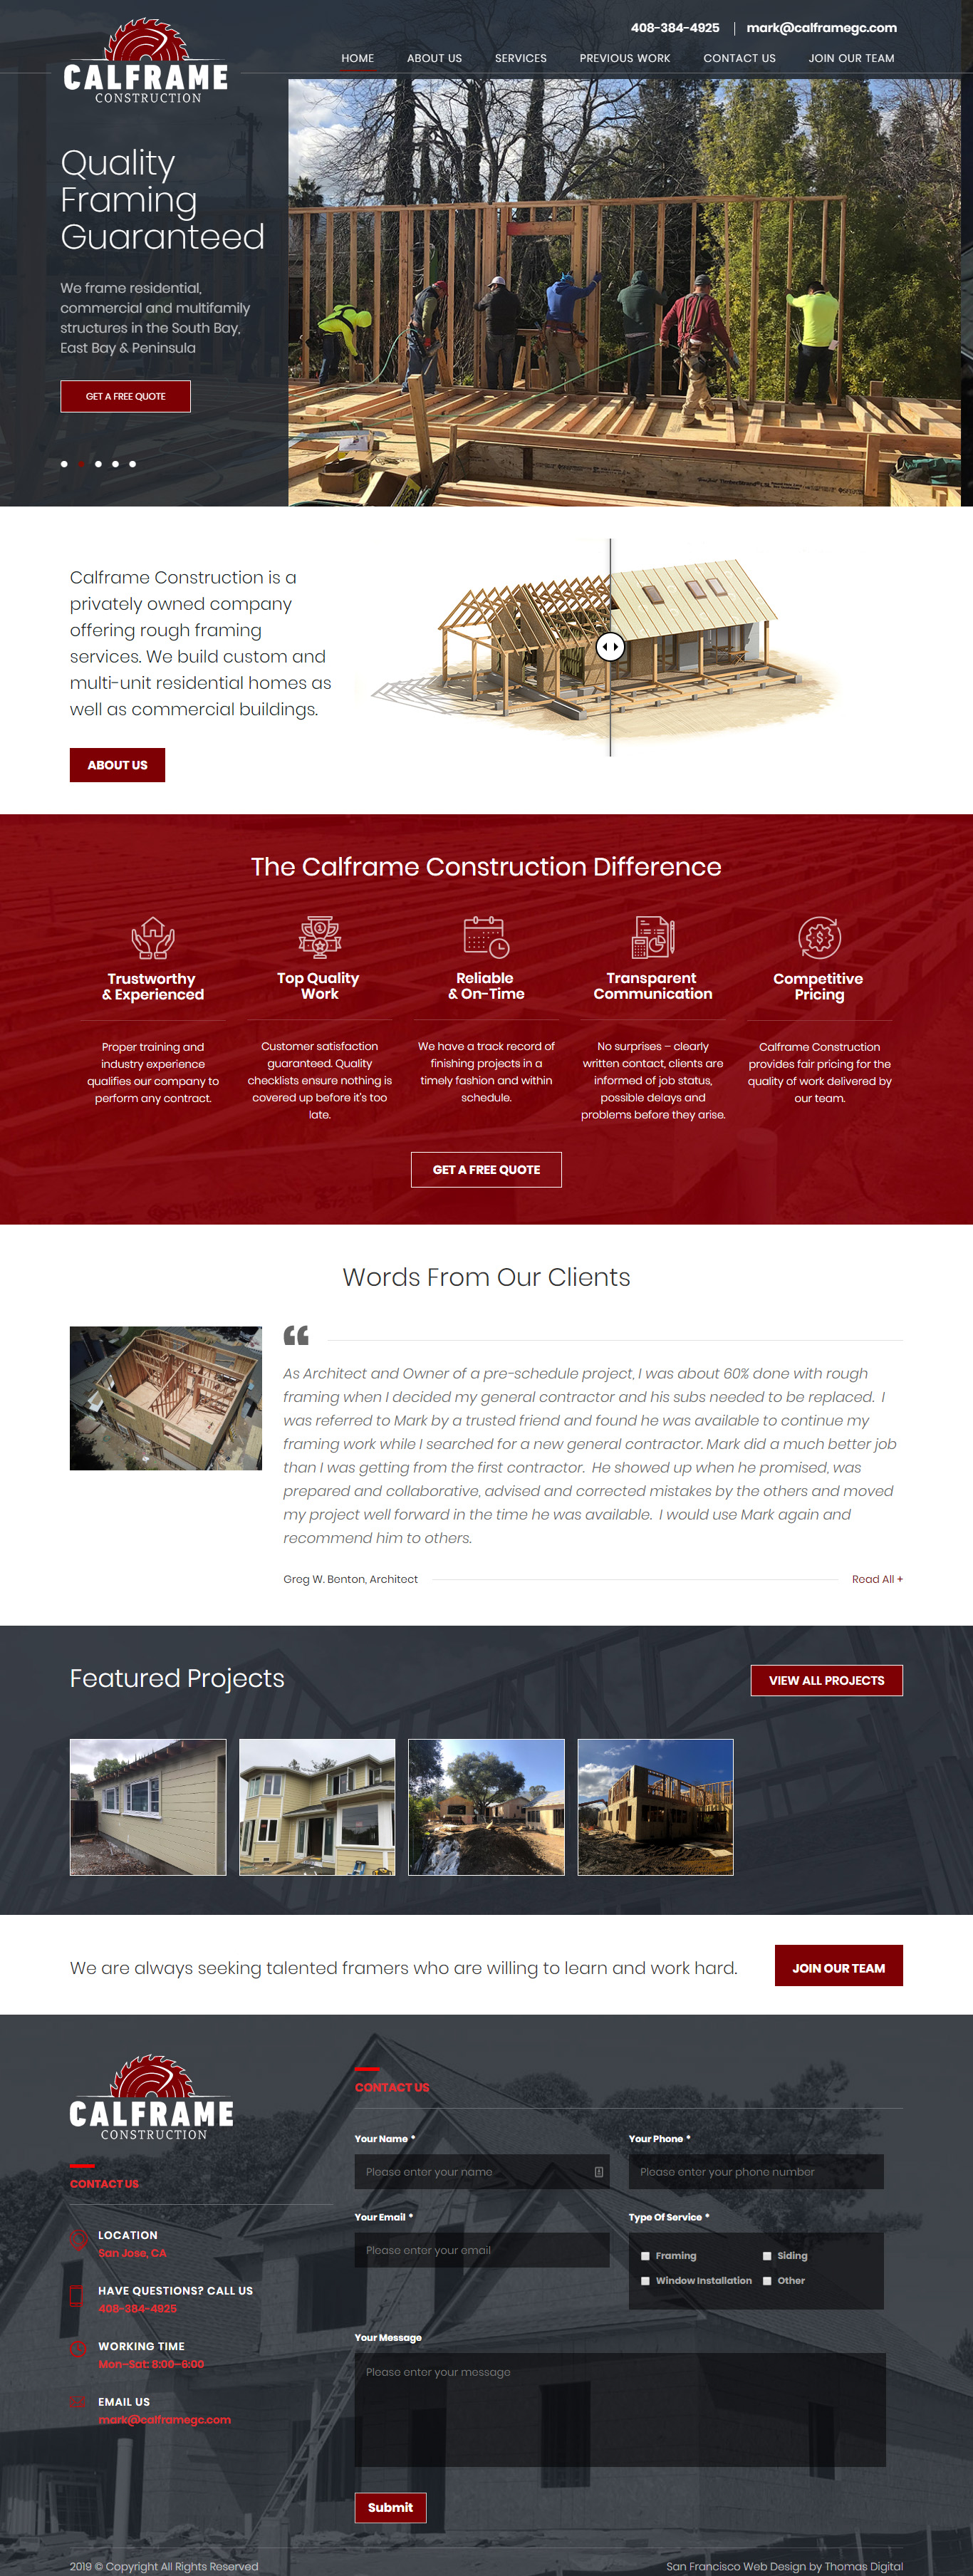 Calframe Construction Inc.